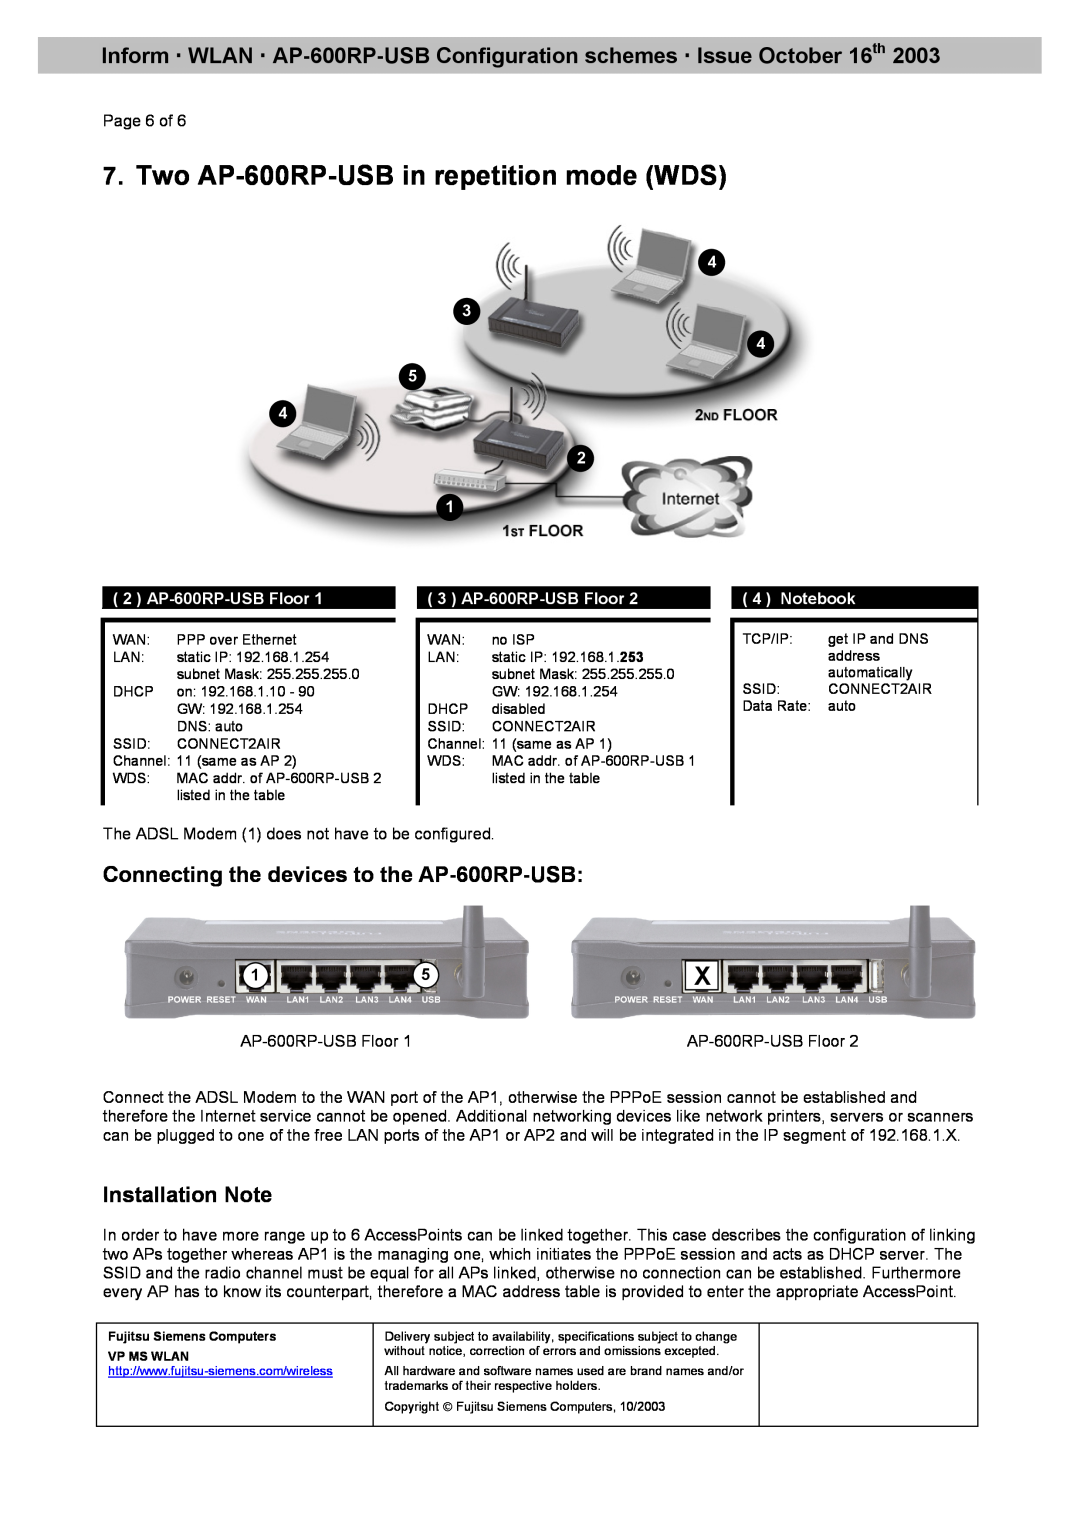 Fujitsu manual Two AP-600RP-USB in repetition mode WDS, 2 AP-600RP-USB Floor, 3 AP-600RP-USB Floor, Notebook 